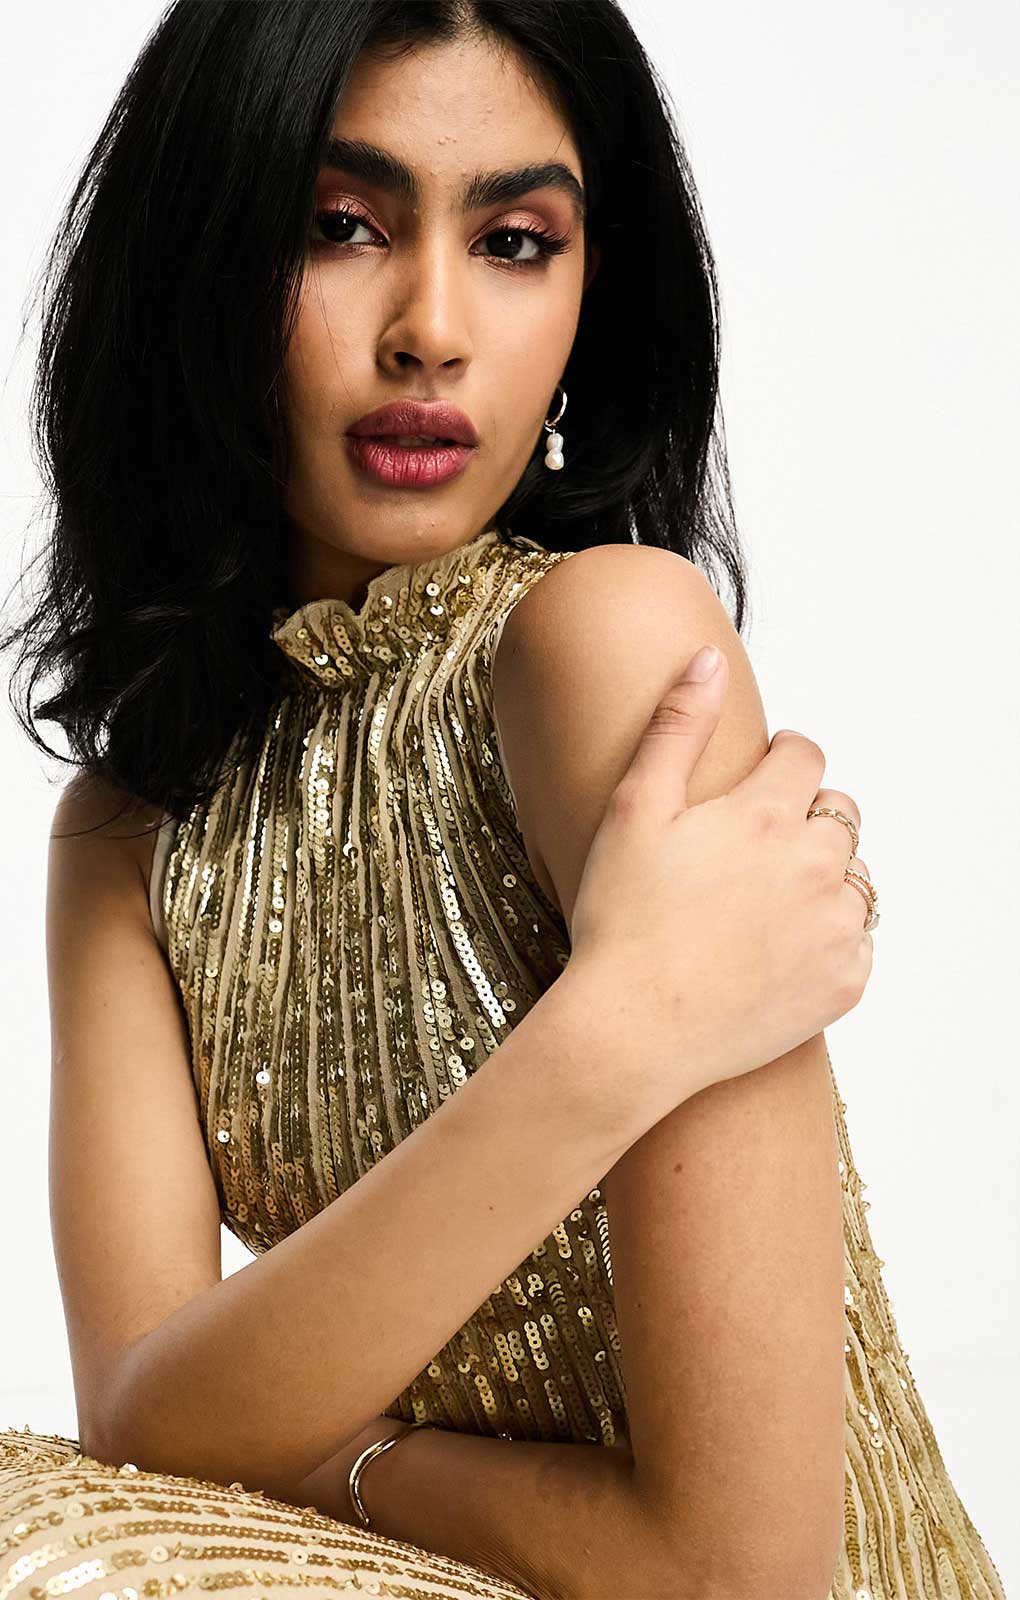 Asos Design High Neck Embellished Midi Dress In Plisse Sequin In Gold product image